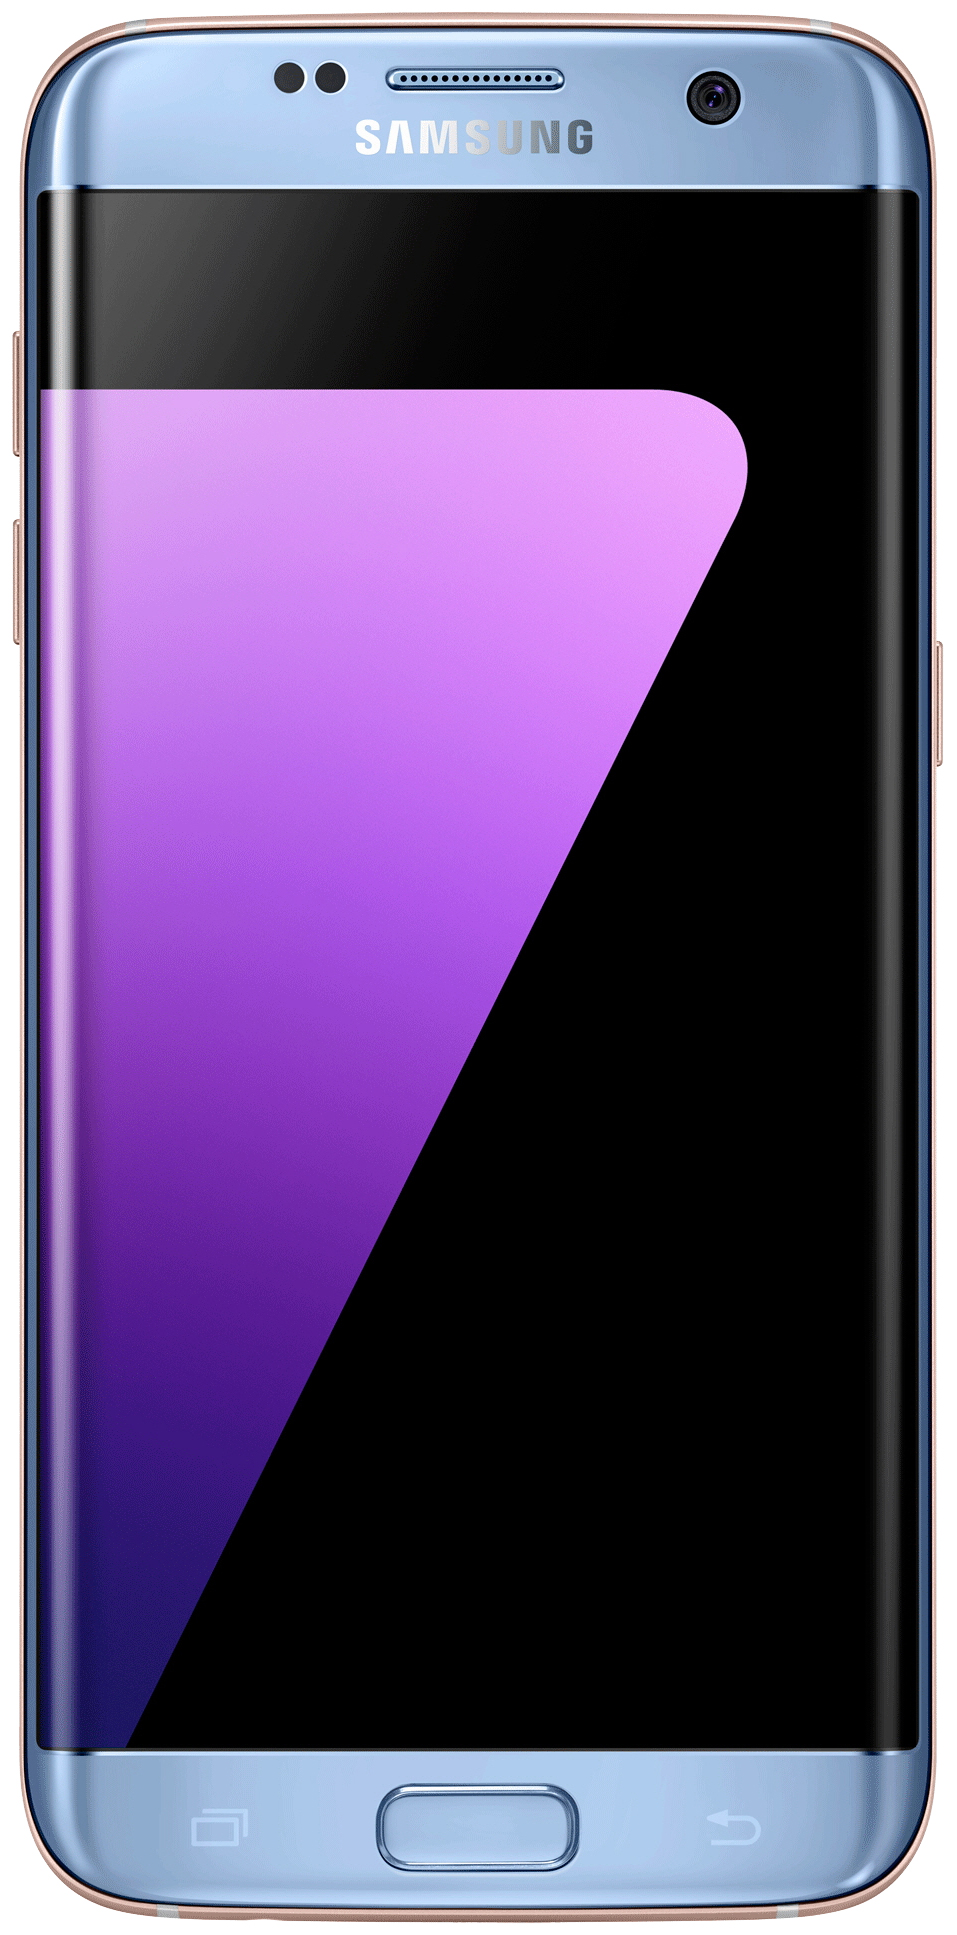 Samsung galaxy s7 edge sim unlock code free phone